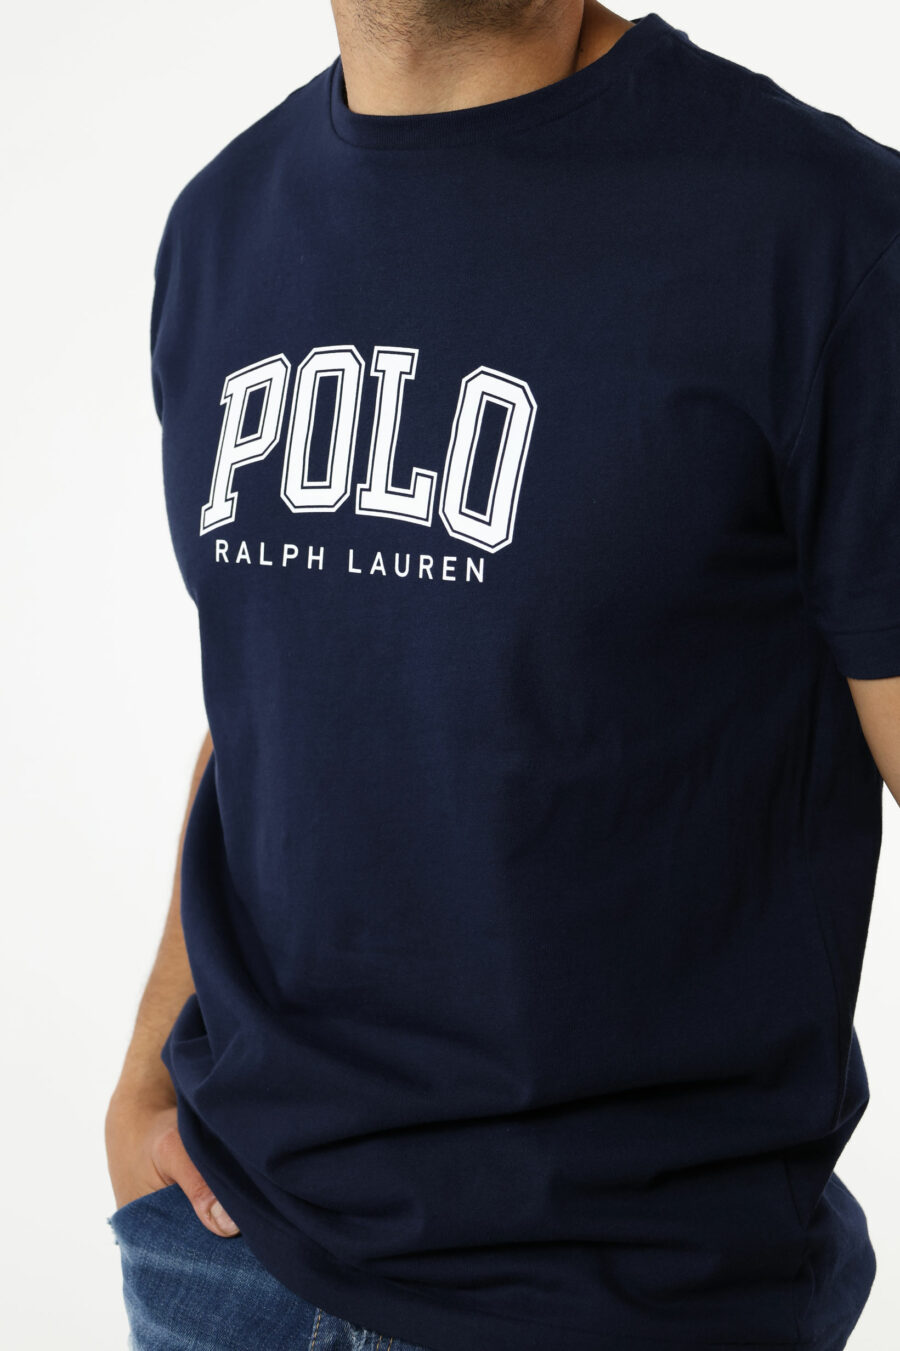 T-shirt bleu foncé avec maxilogo "polo" blanc - 111236